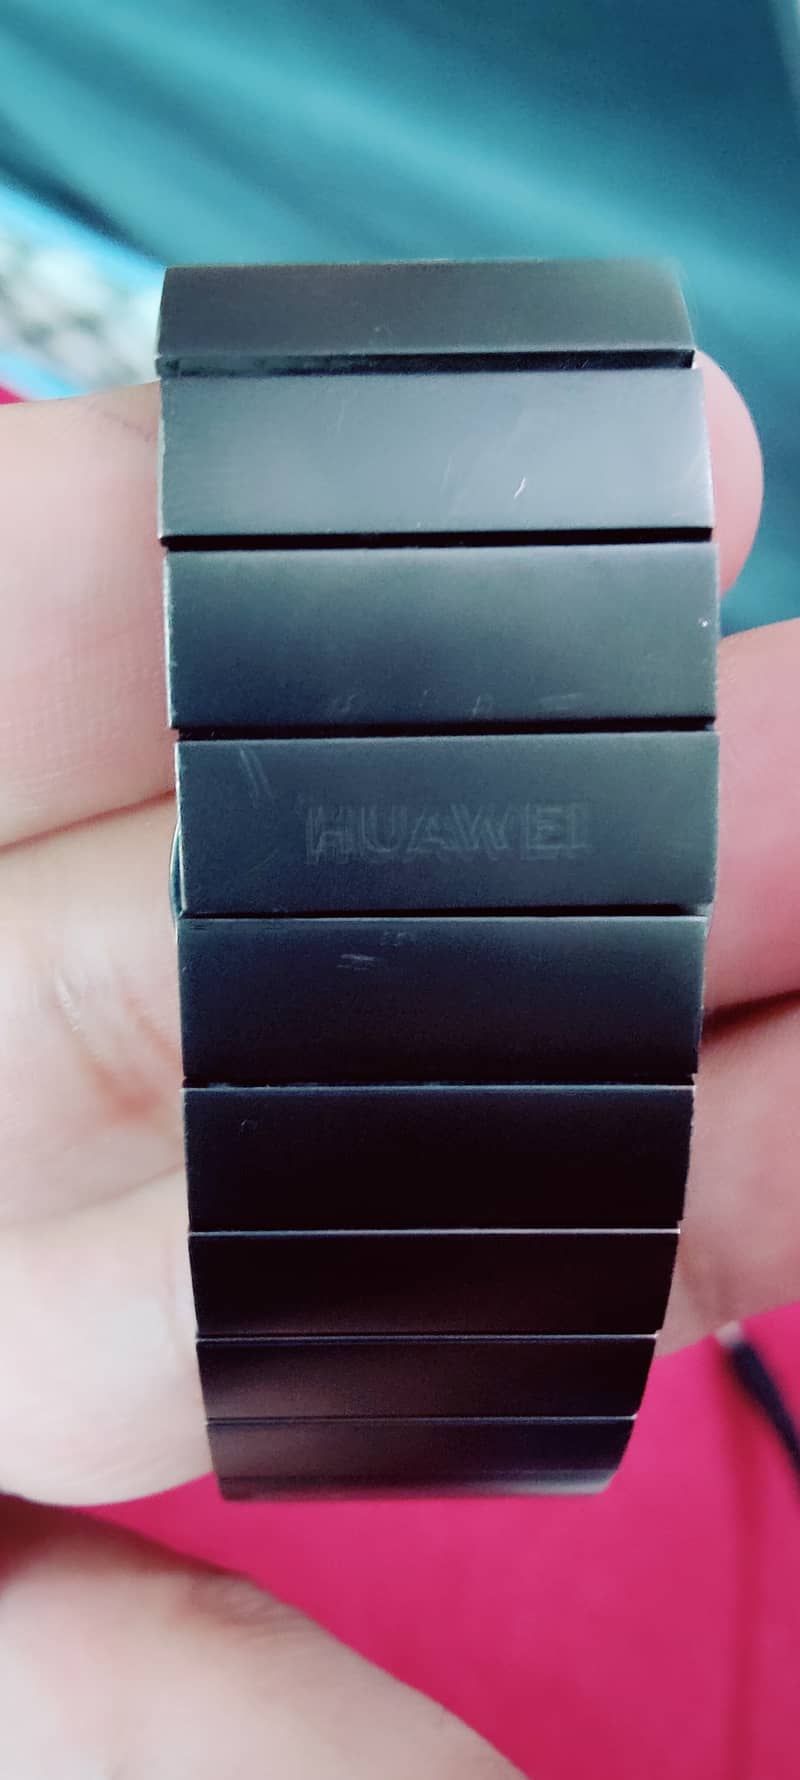 Huawei GT-2 (46mm) smart watch 8